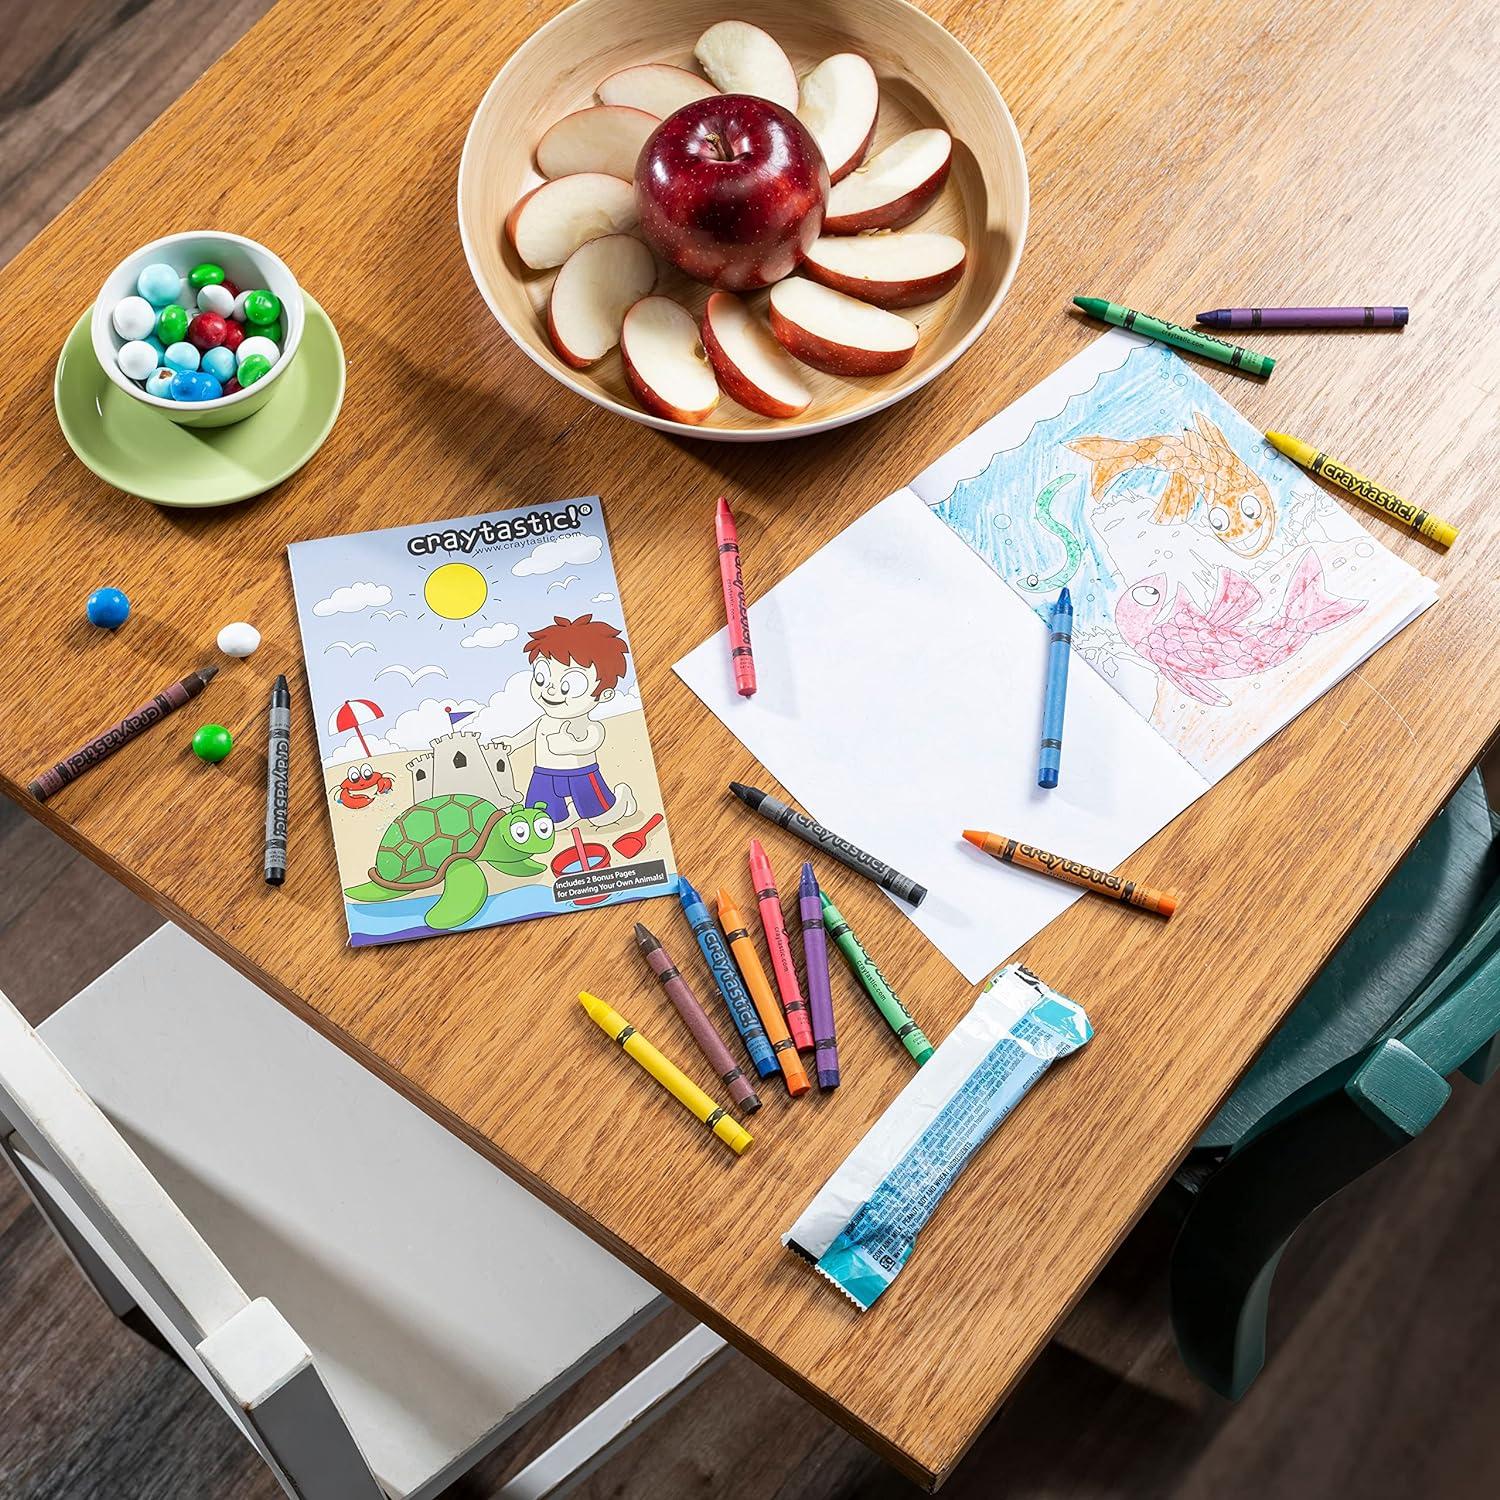 Craytastic! Bulk Coloring Books for Kids Variety Assortment, Pack